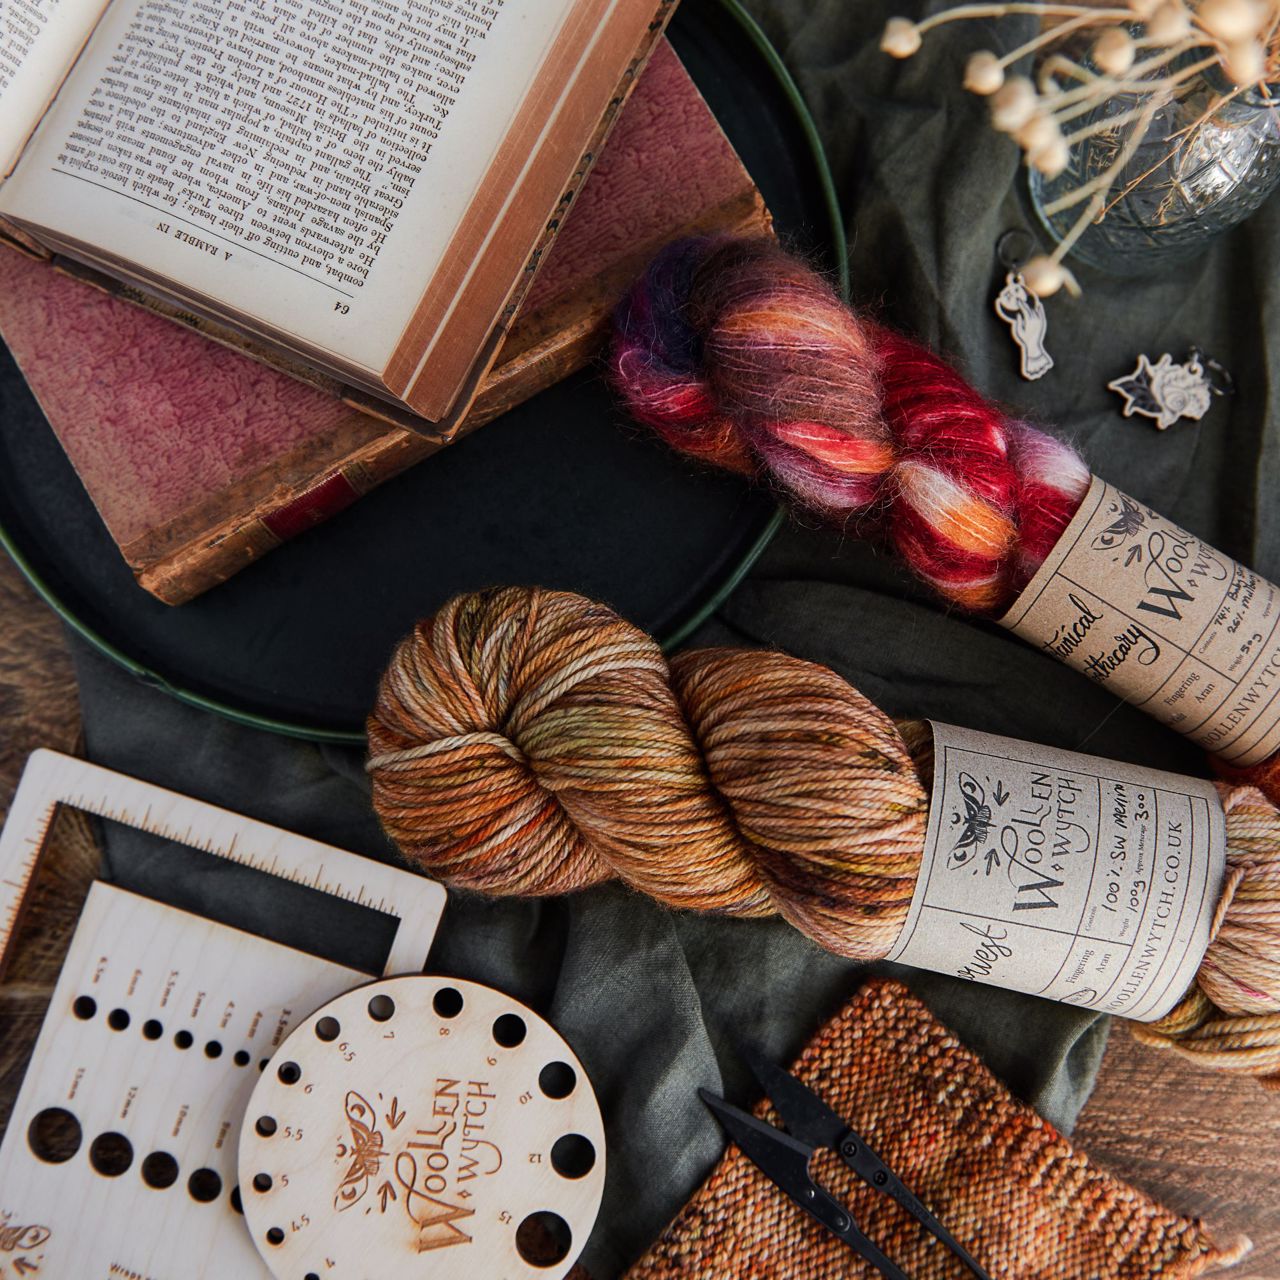 Hand dyed yarn UK and knitting accessories - Woollen Wytch Bristol wool shop 